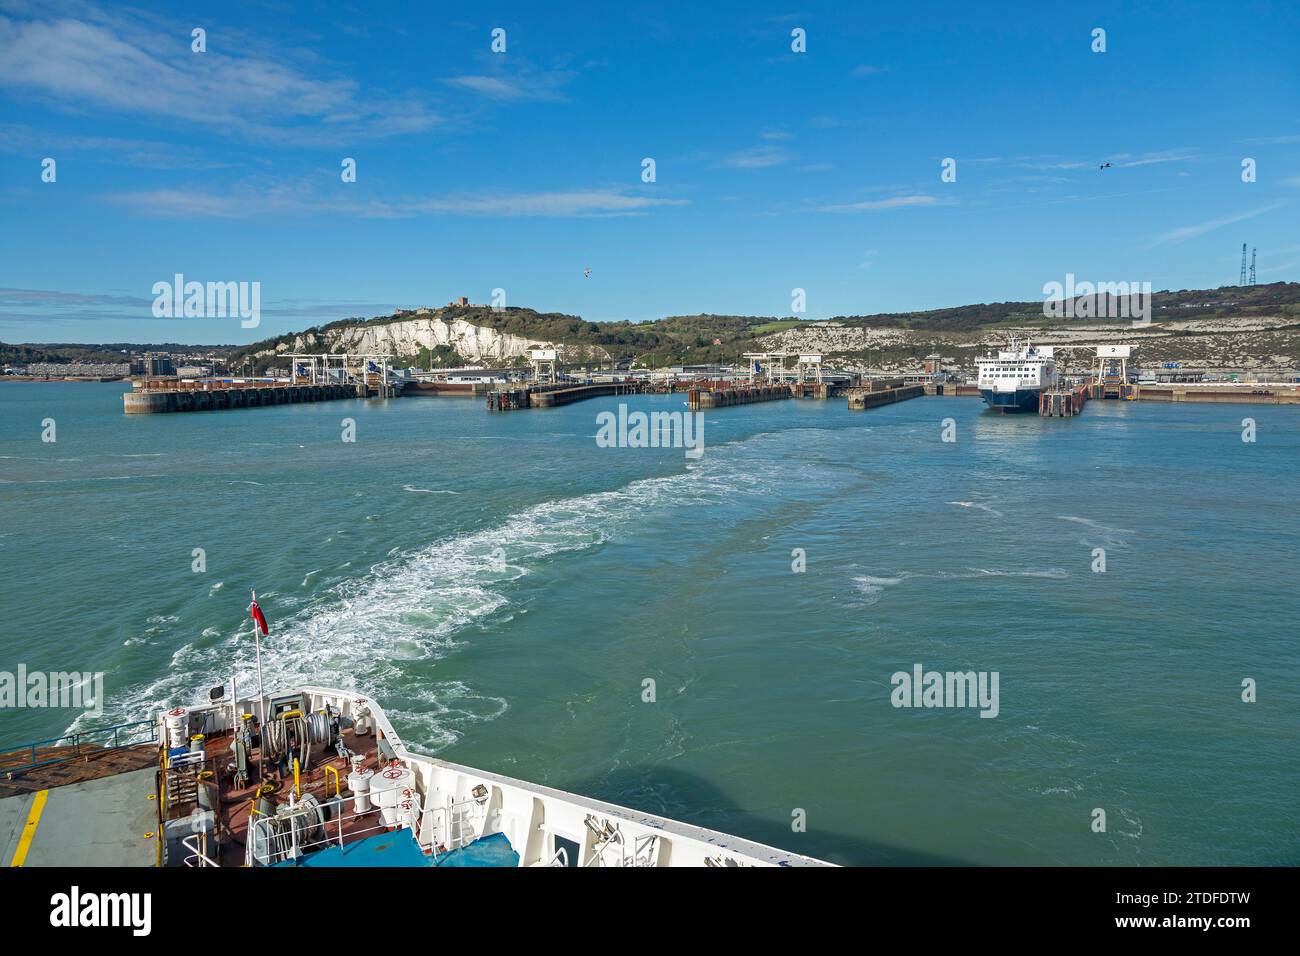 Ferry quittant le port, Douvres, Kent, Angleterre, Grande-Bretagne Banque D'Images